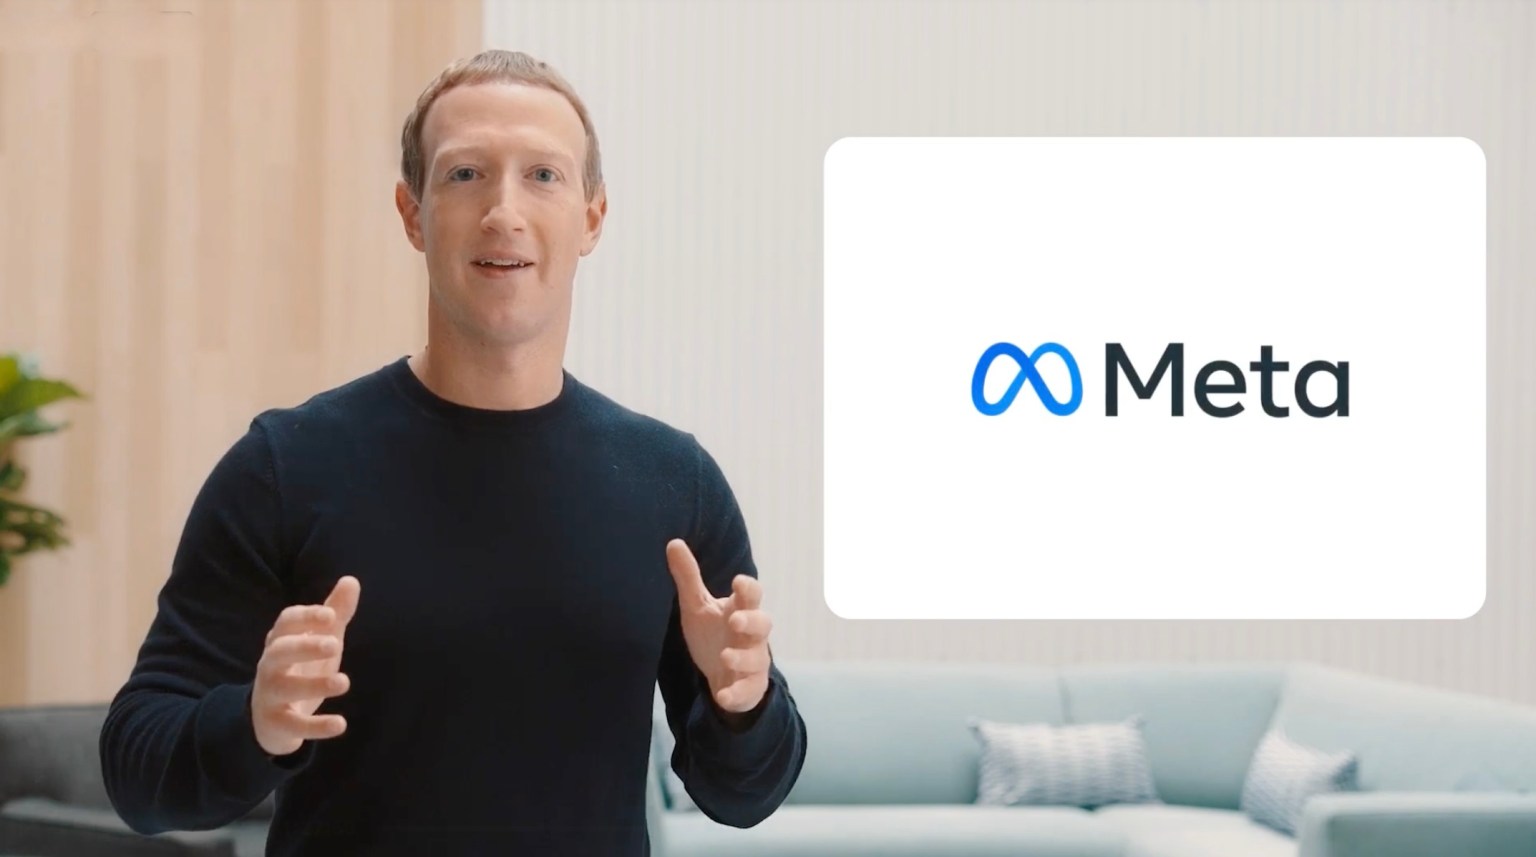 Mr Mark Zuckerberg wearing a black tshir, talking about Meta and Metaverse